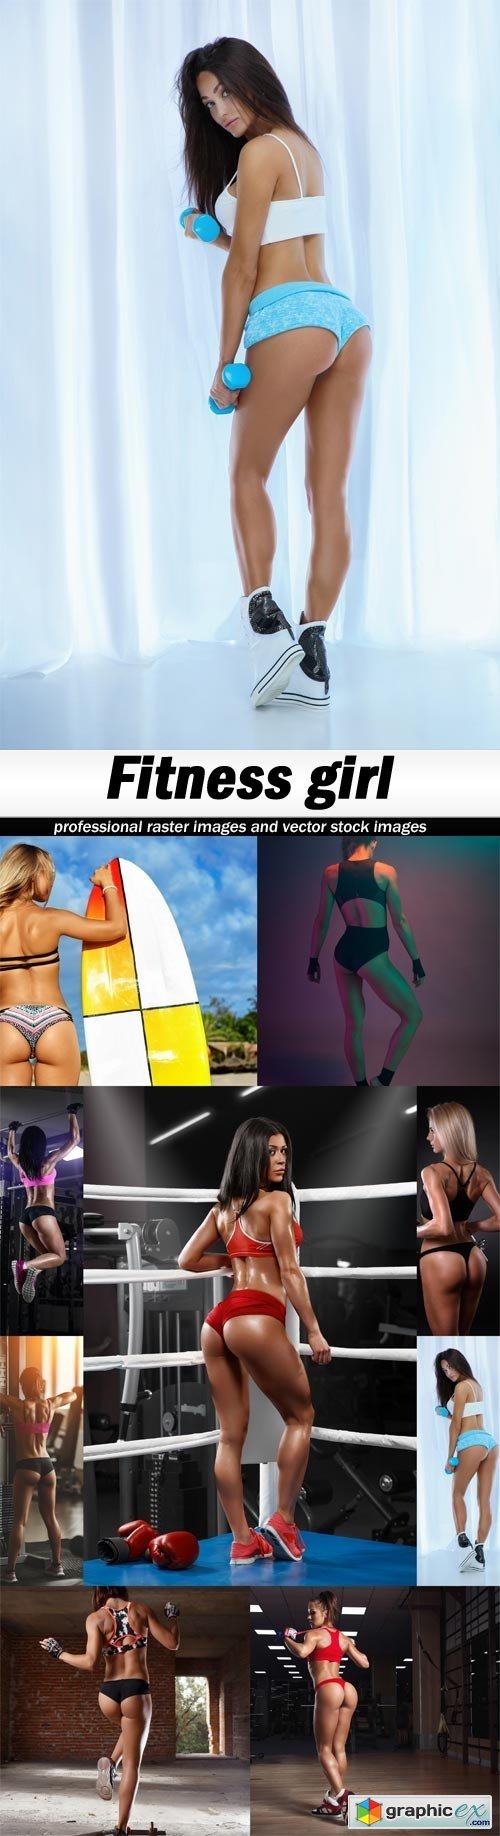 Fitness girl-9xJPEGs